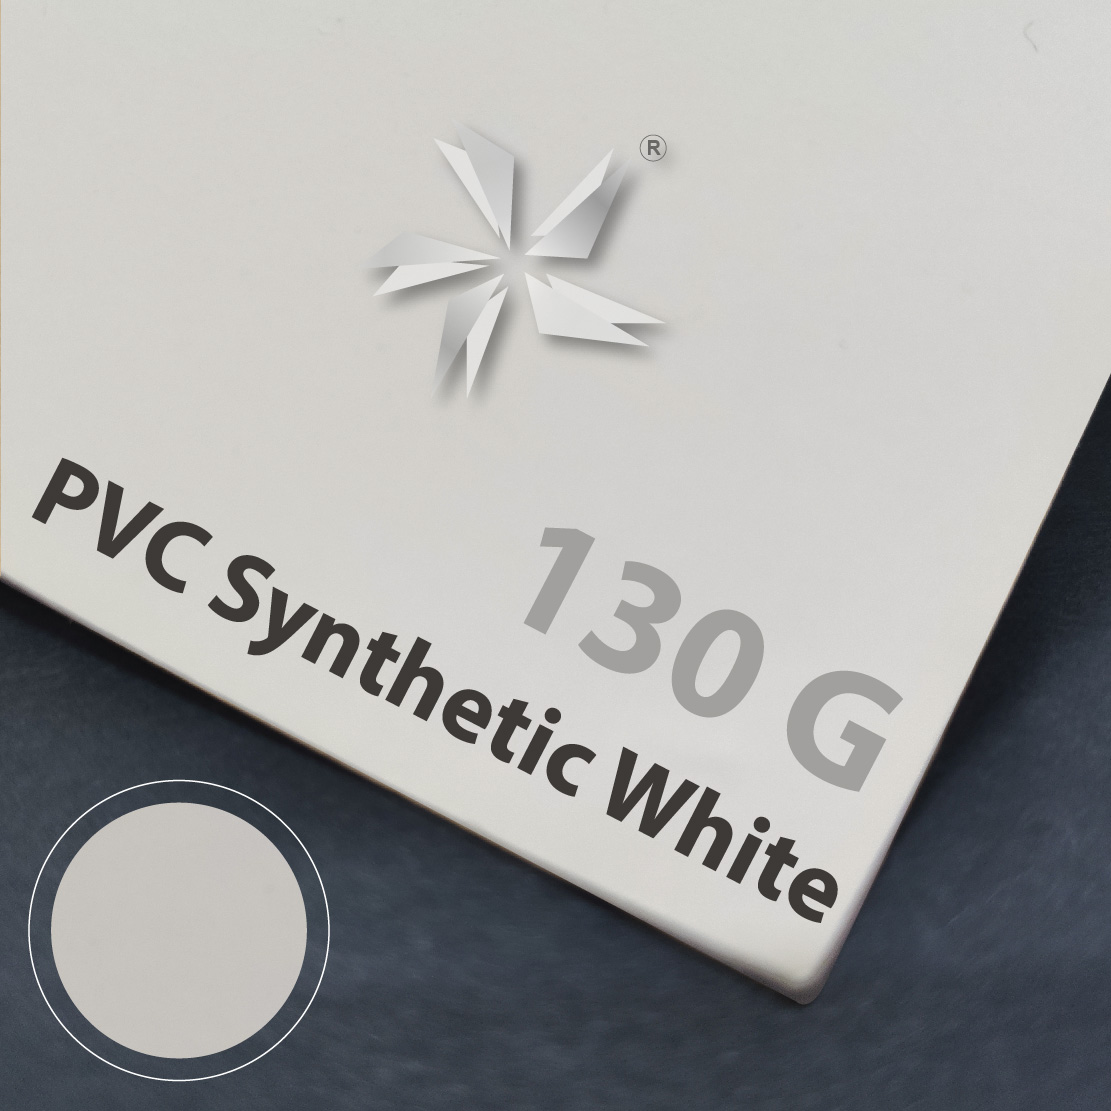 PVC Synthetic White 130 micron (175gsm)